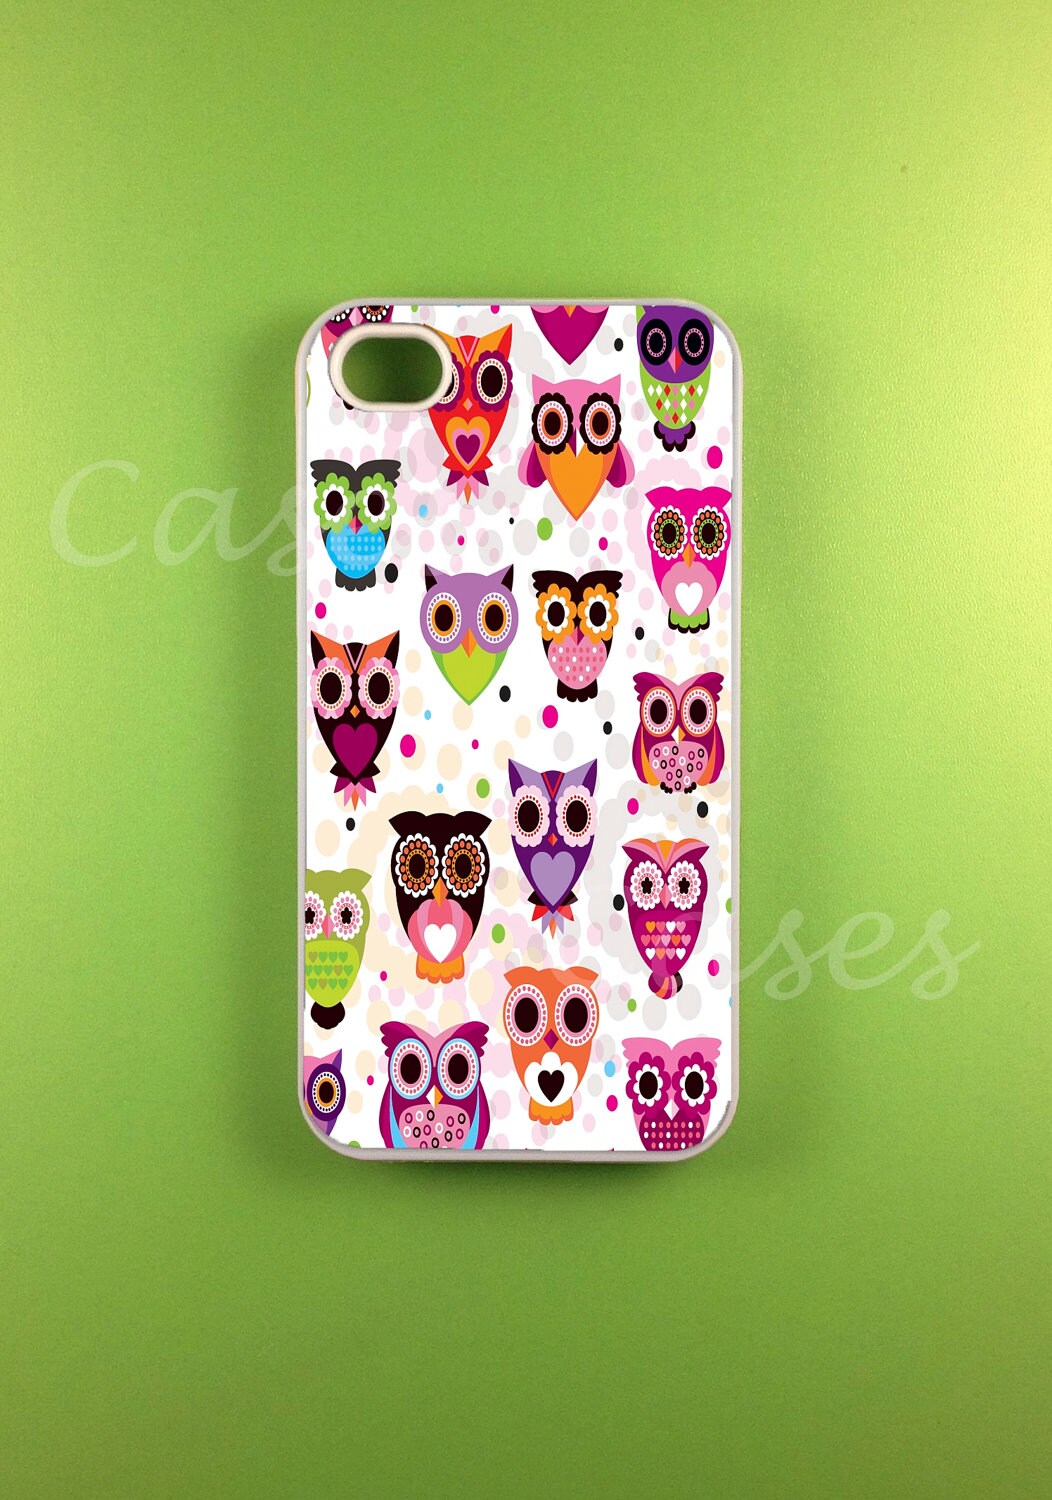 Iphone 4s Cases Cute